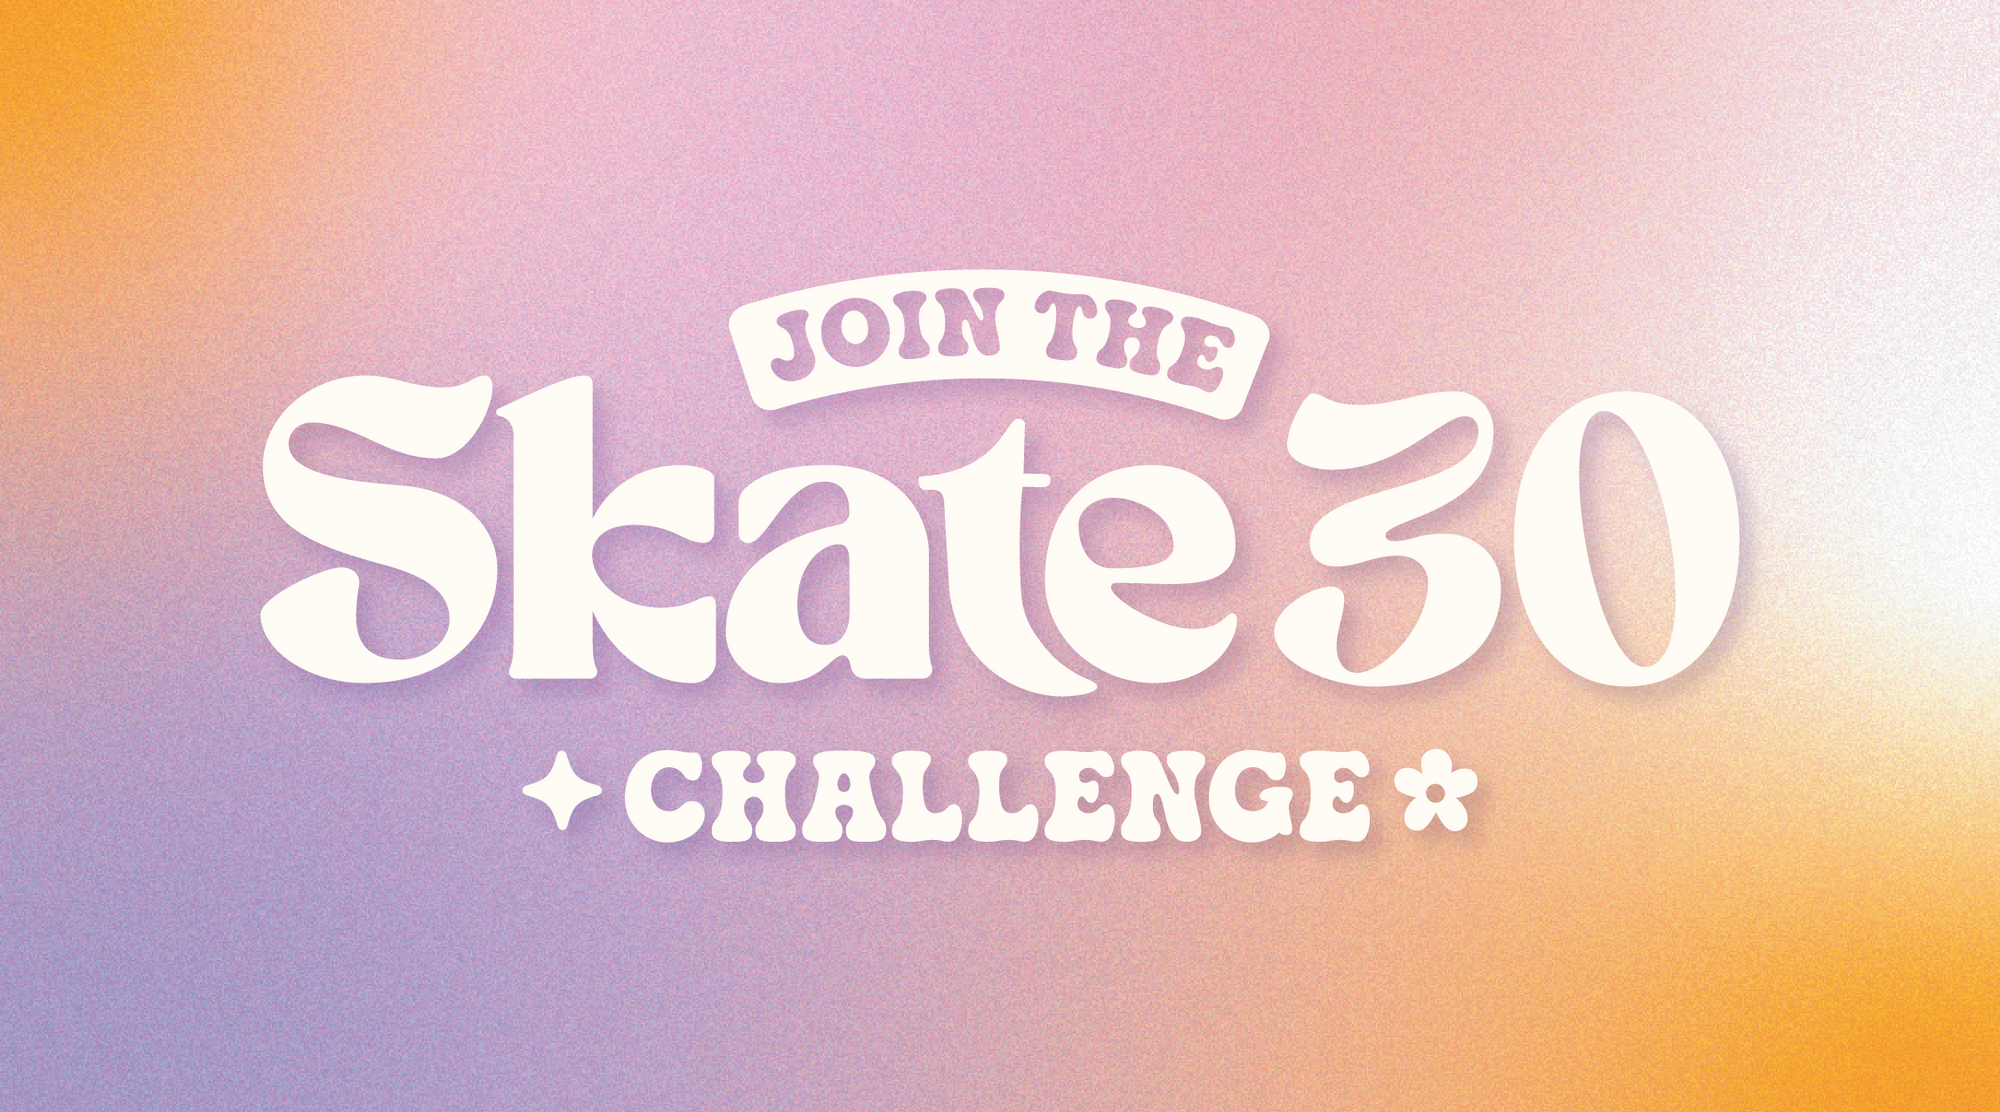 Skate30 Challenge